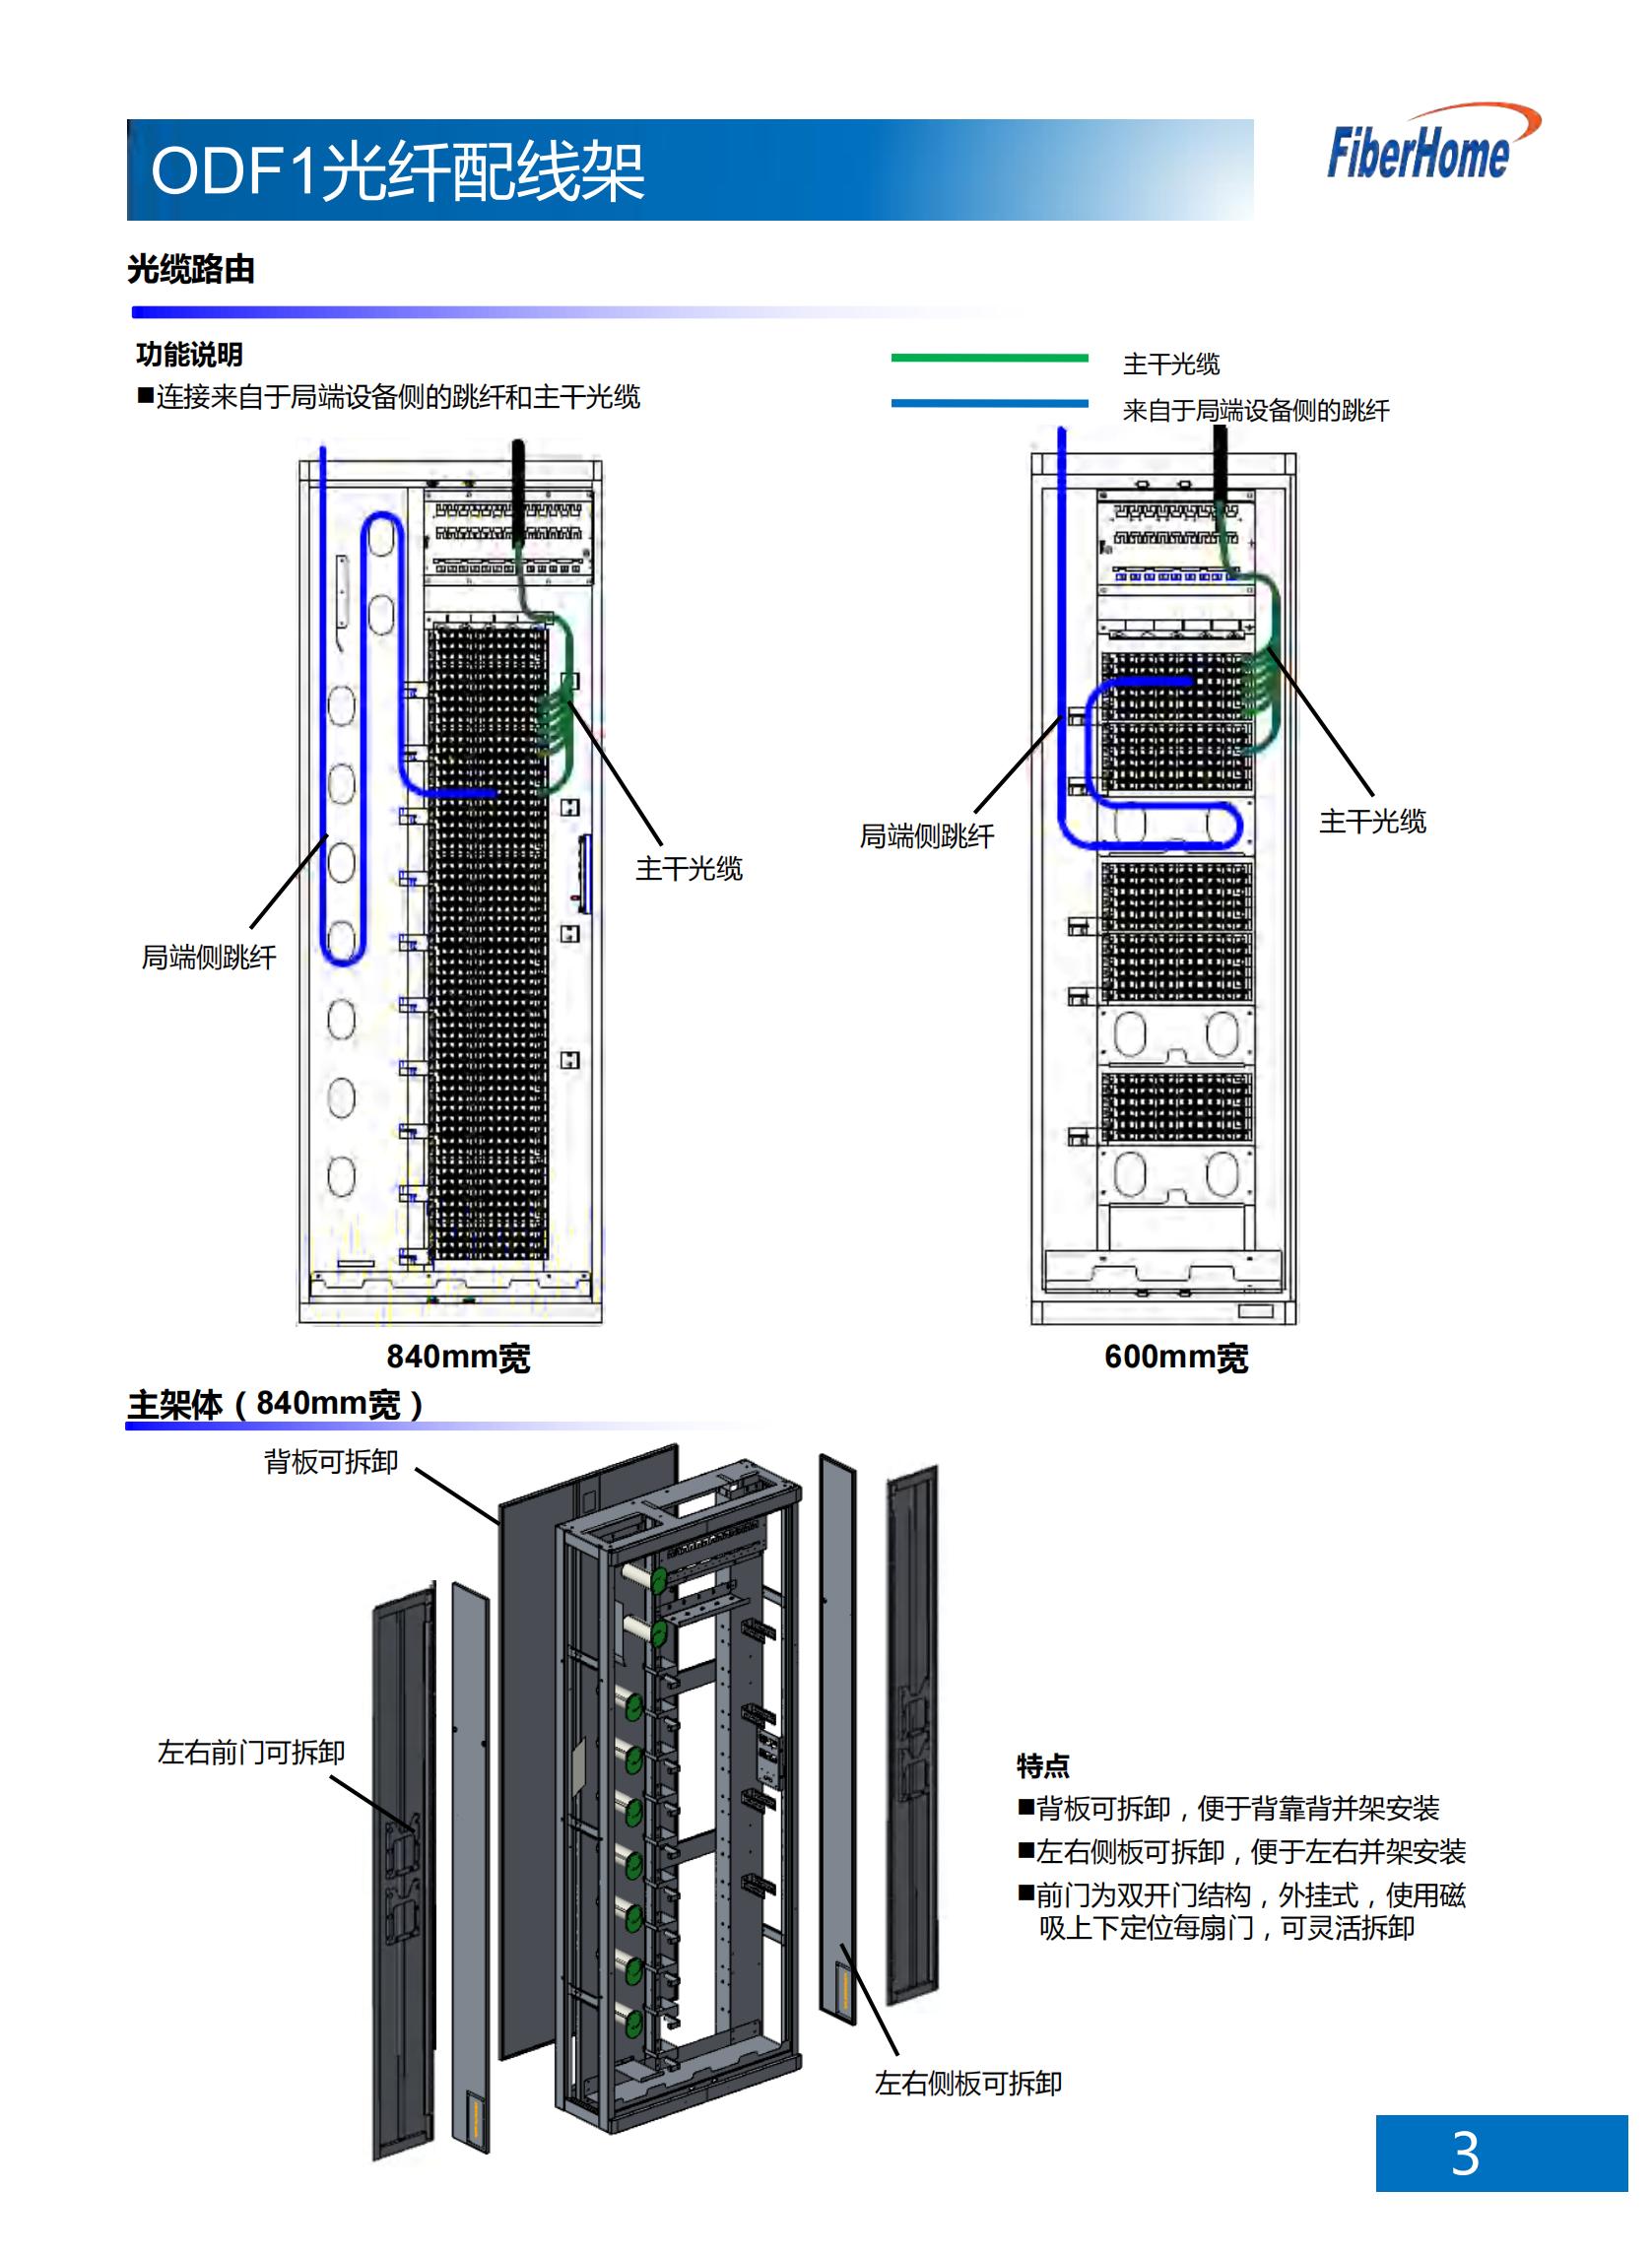 ODF101-720-A2-SC ODF optical fiber distribution frame (720-core floor-standing all include 12-core SC fusion integration unit)